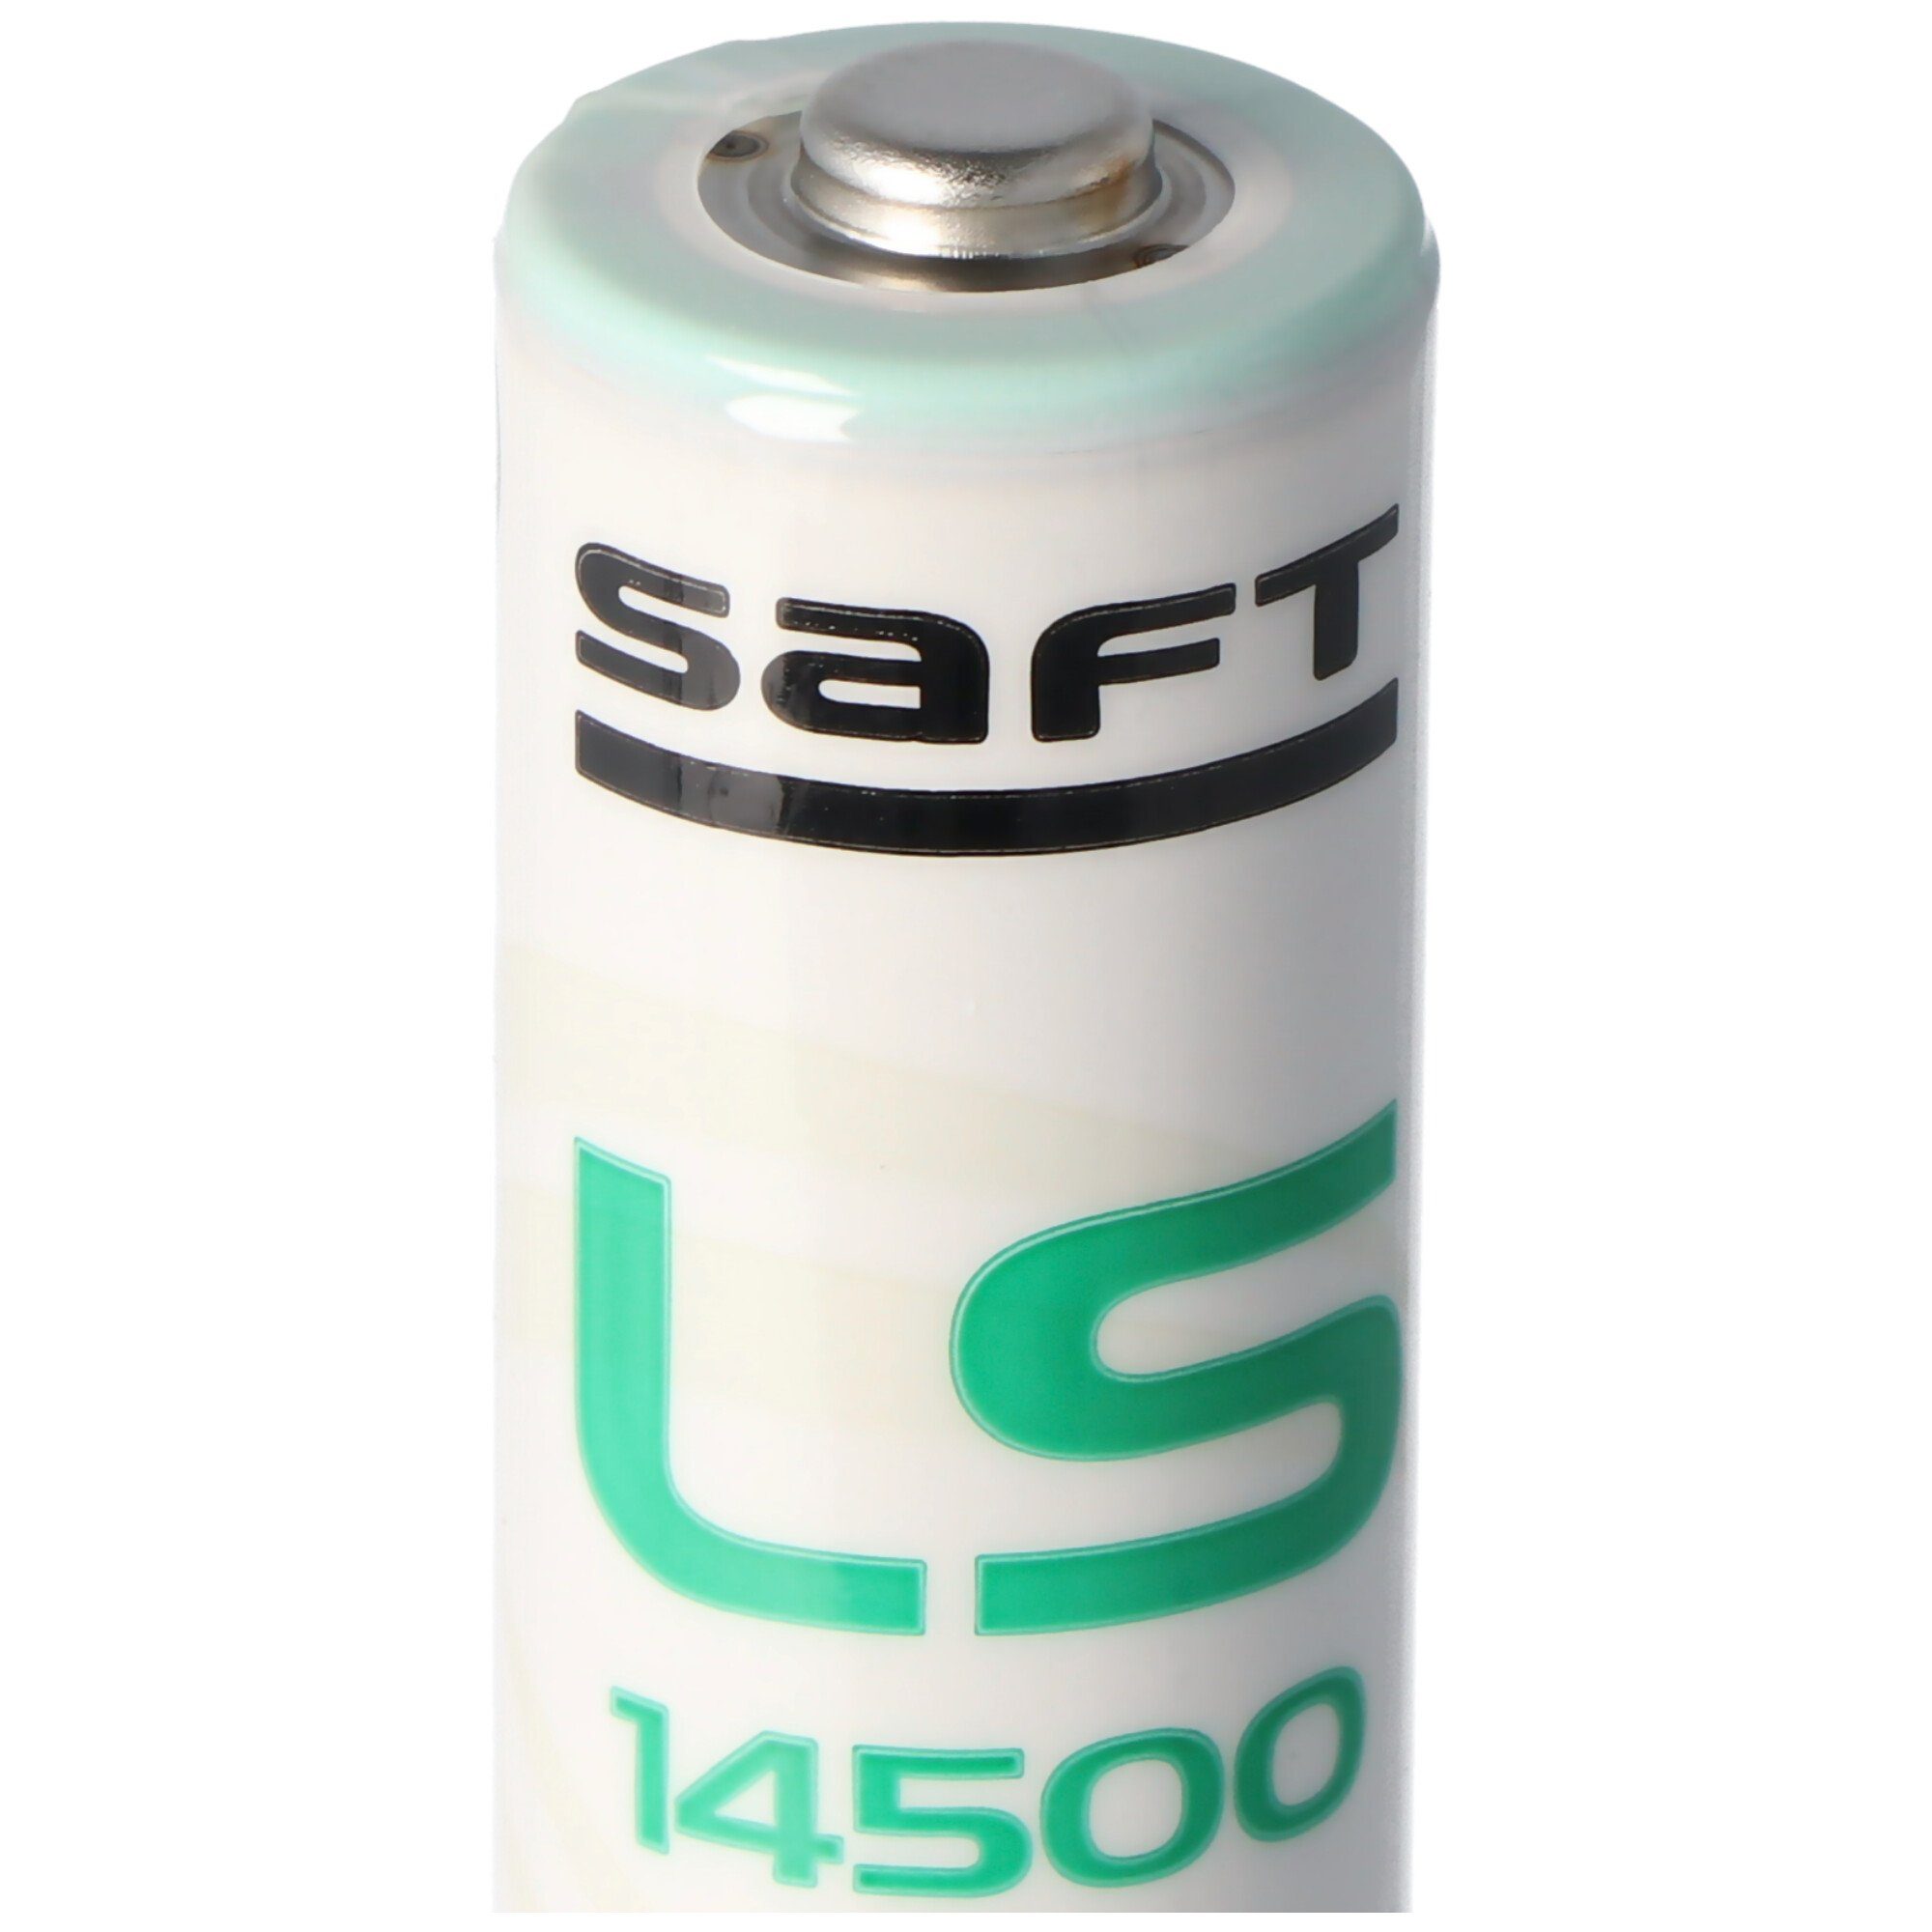 Simatic Batterie passend 2Way Saft ABUS für Siemens Batterie Alarmanlage Secvest AA